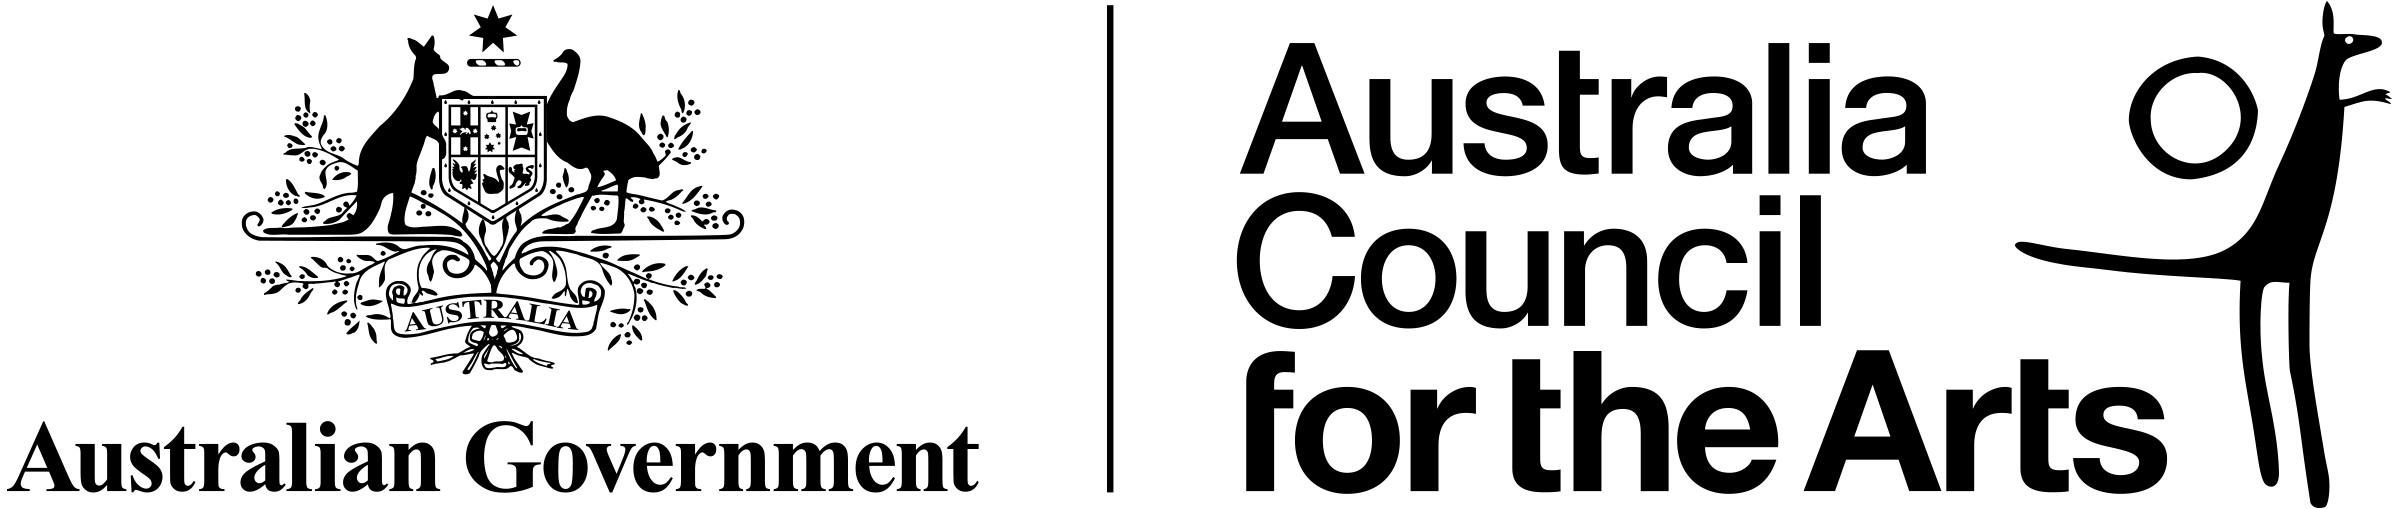 Australian Logo - Logo downloads | Australia Council